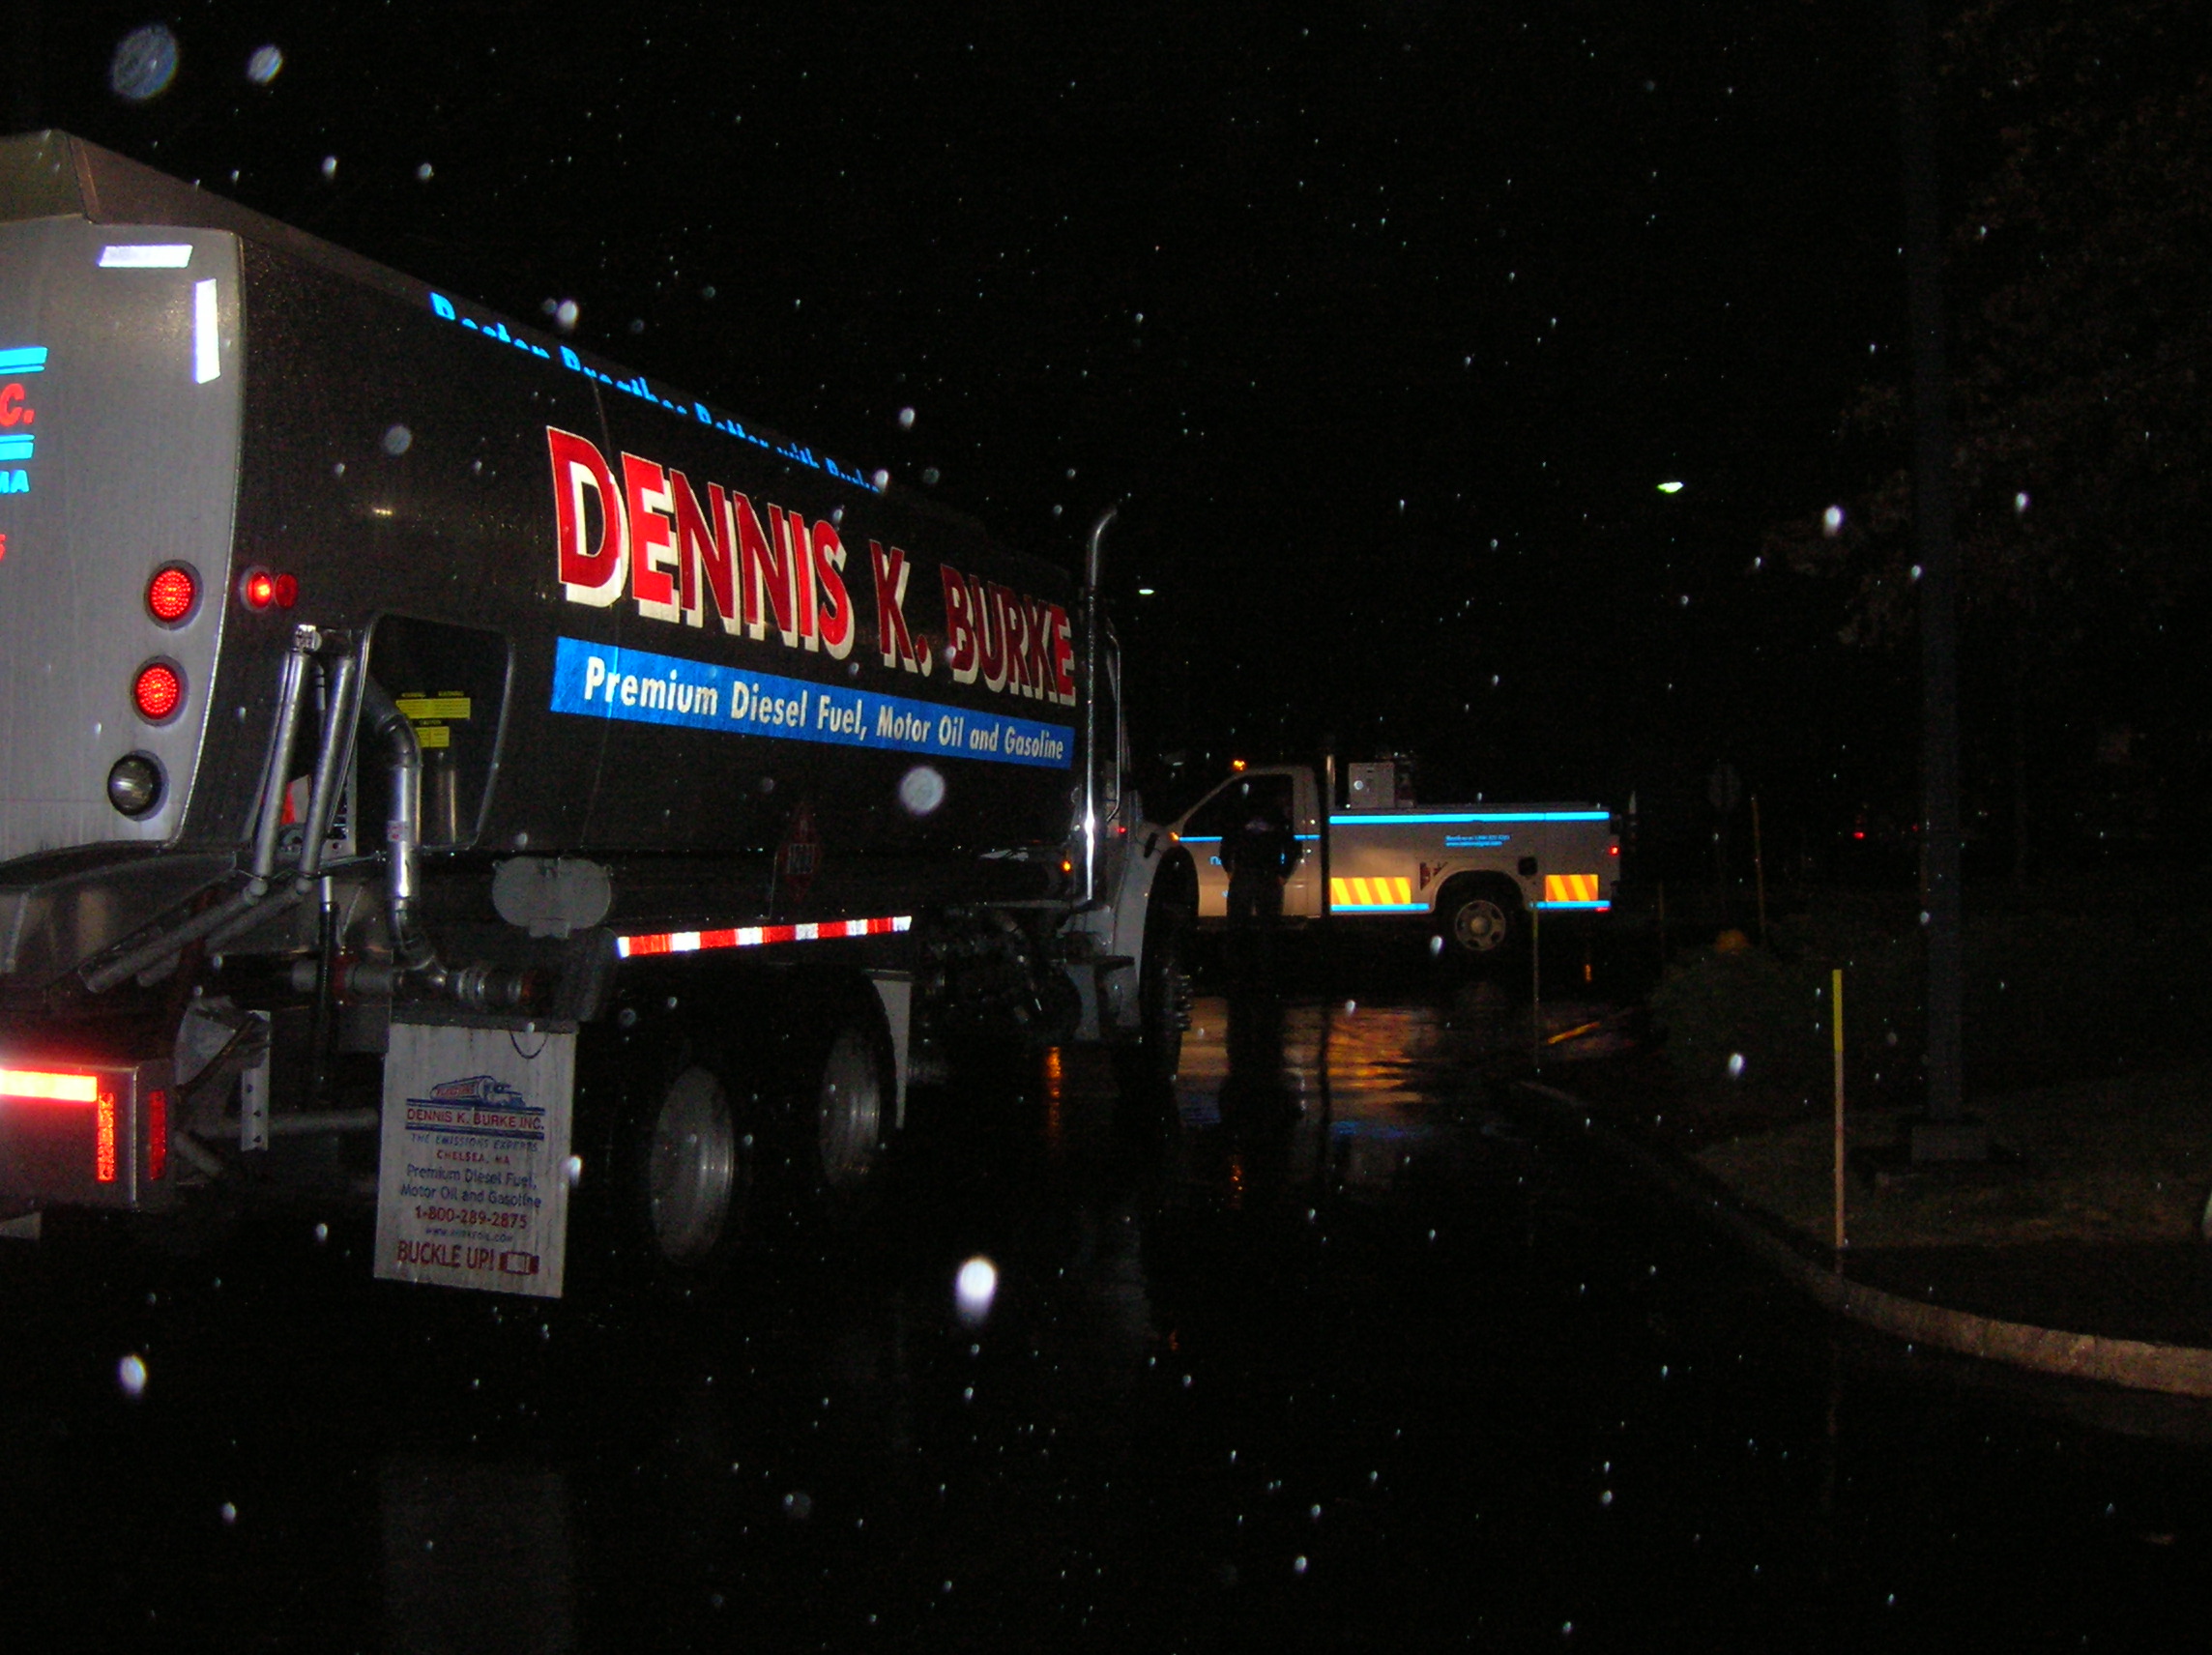 Dennis K. Burk refueling truck performing and emergency refueling at night